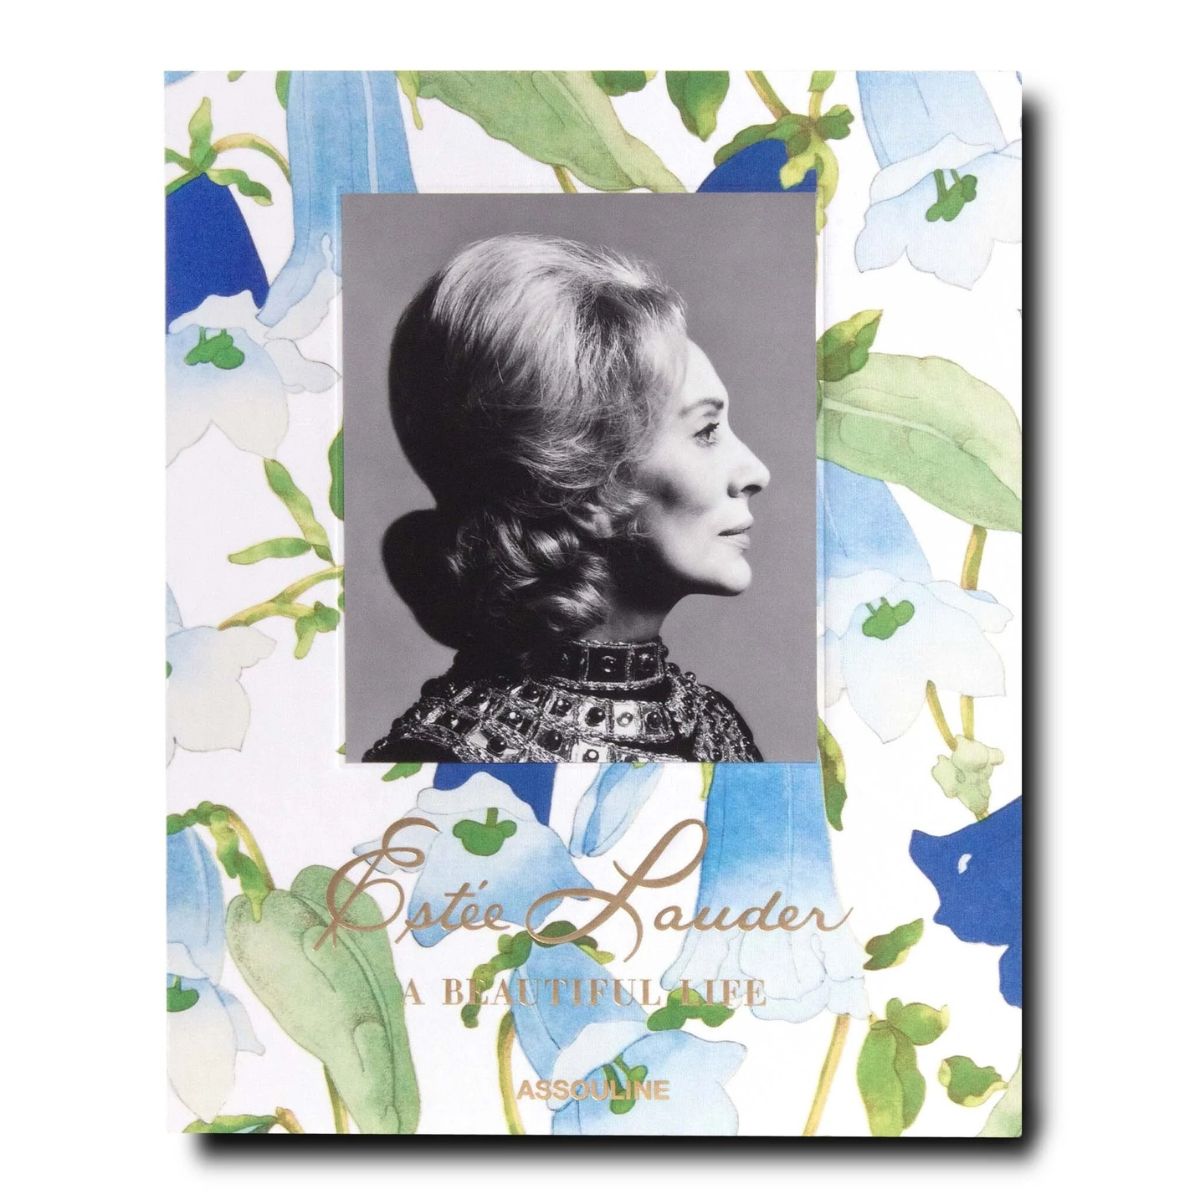 The Extraordinary Life of Estée Lauder, the Queen of Cosmetics